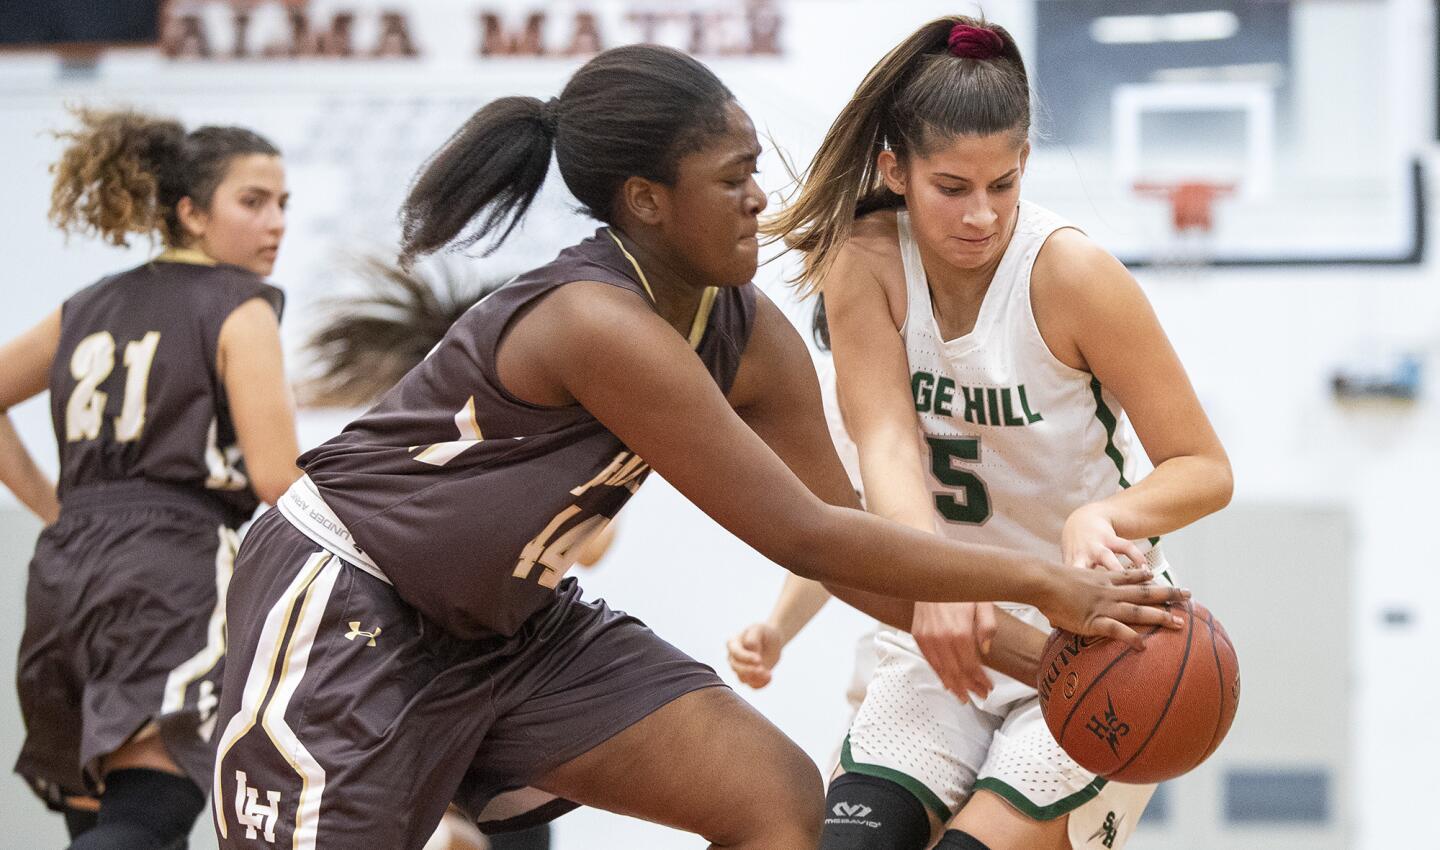 Photo Gallery: Sage Hill vs. Laguna Hills in girls' basketball